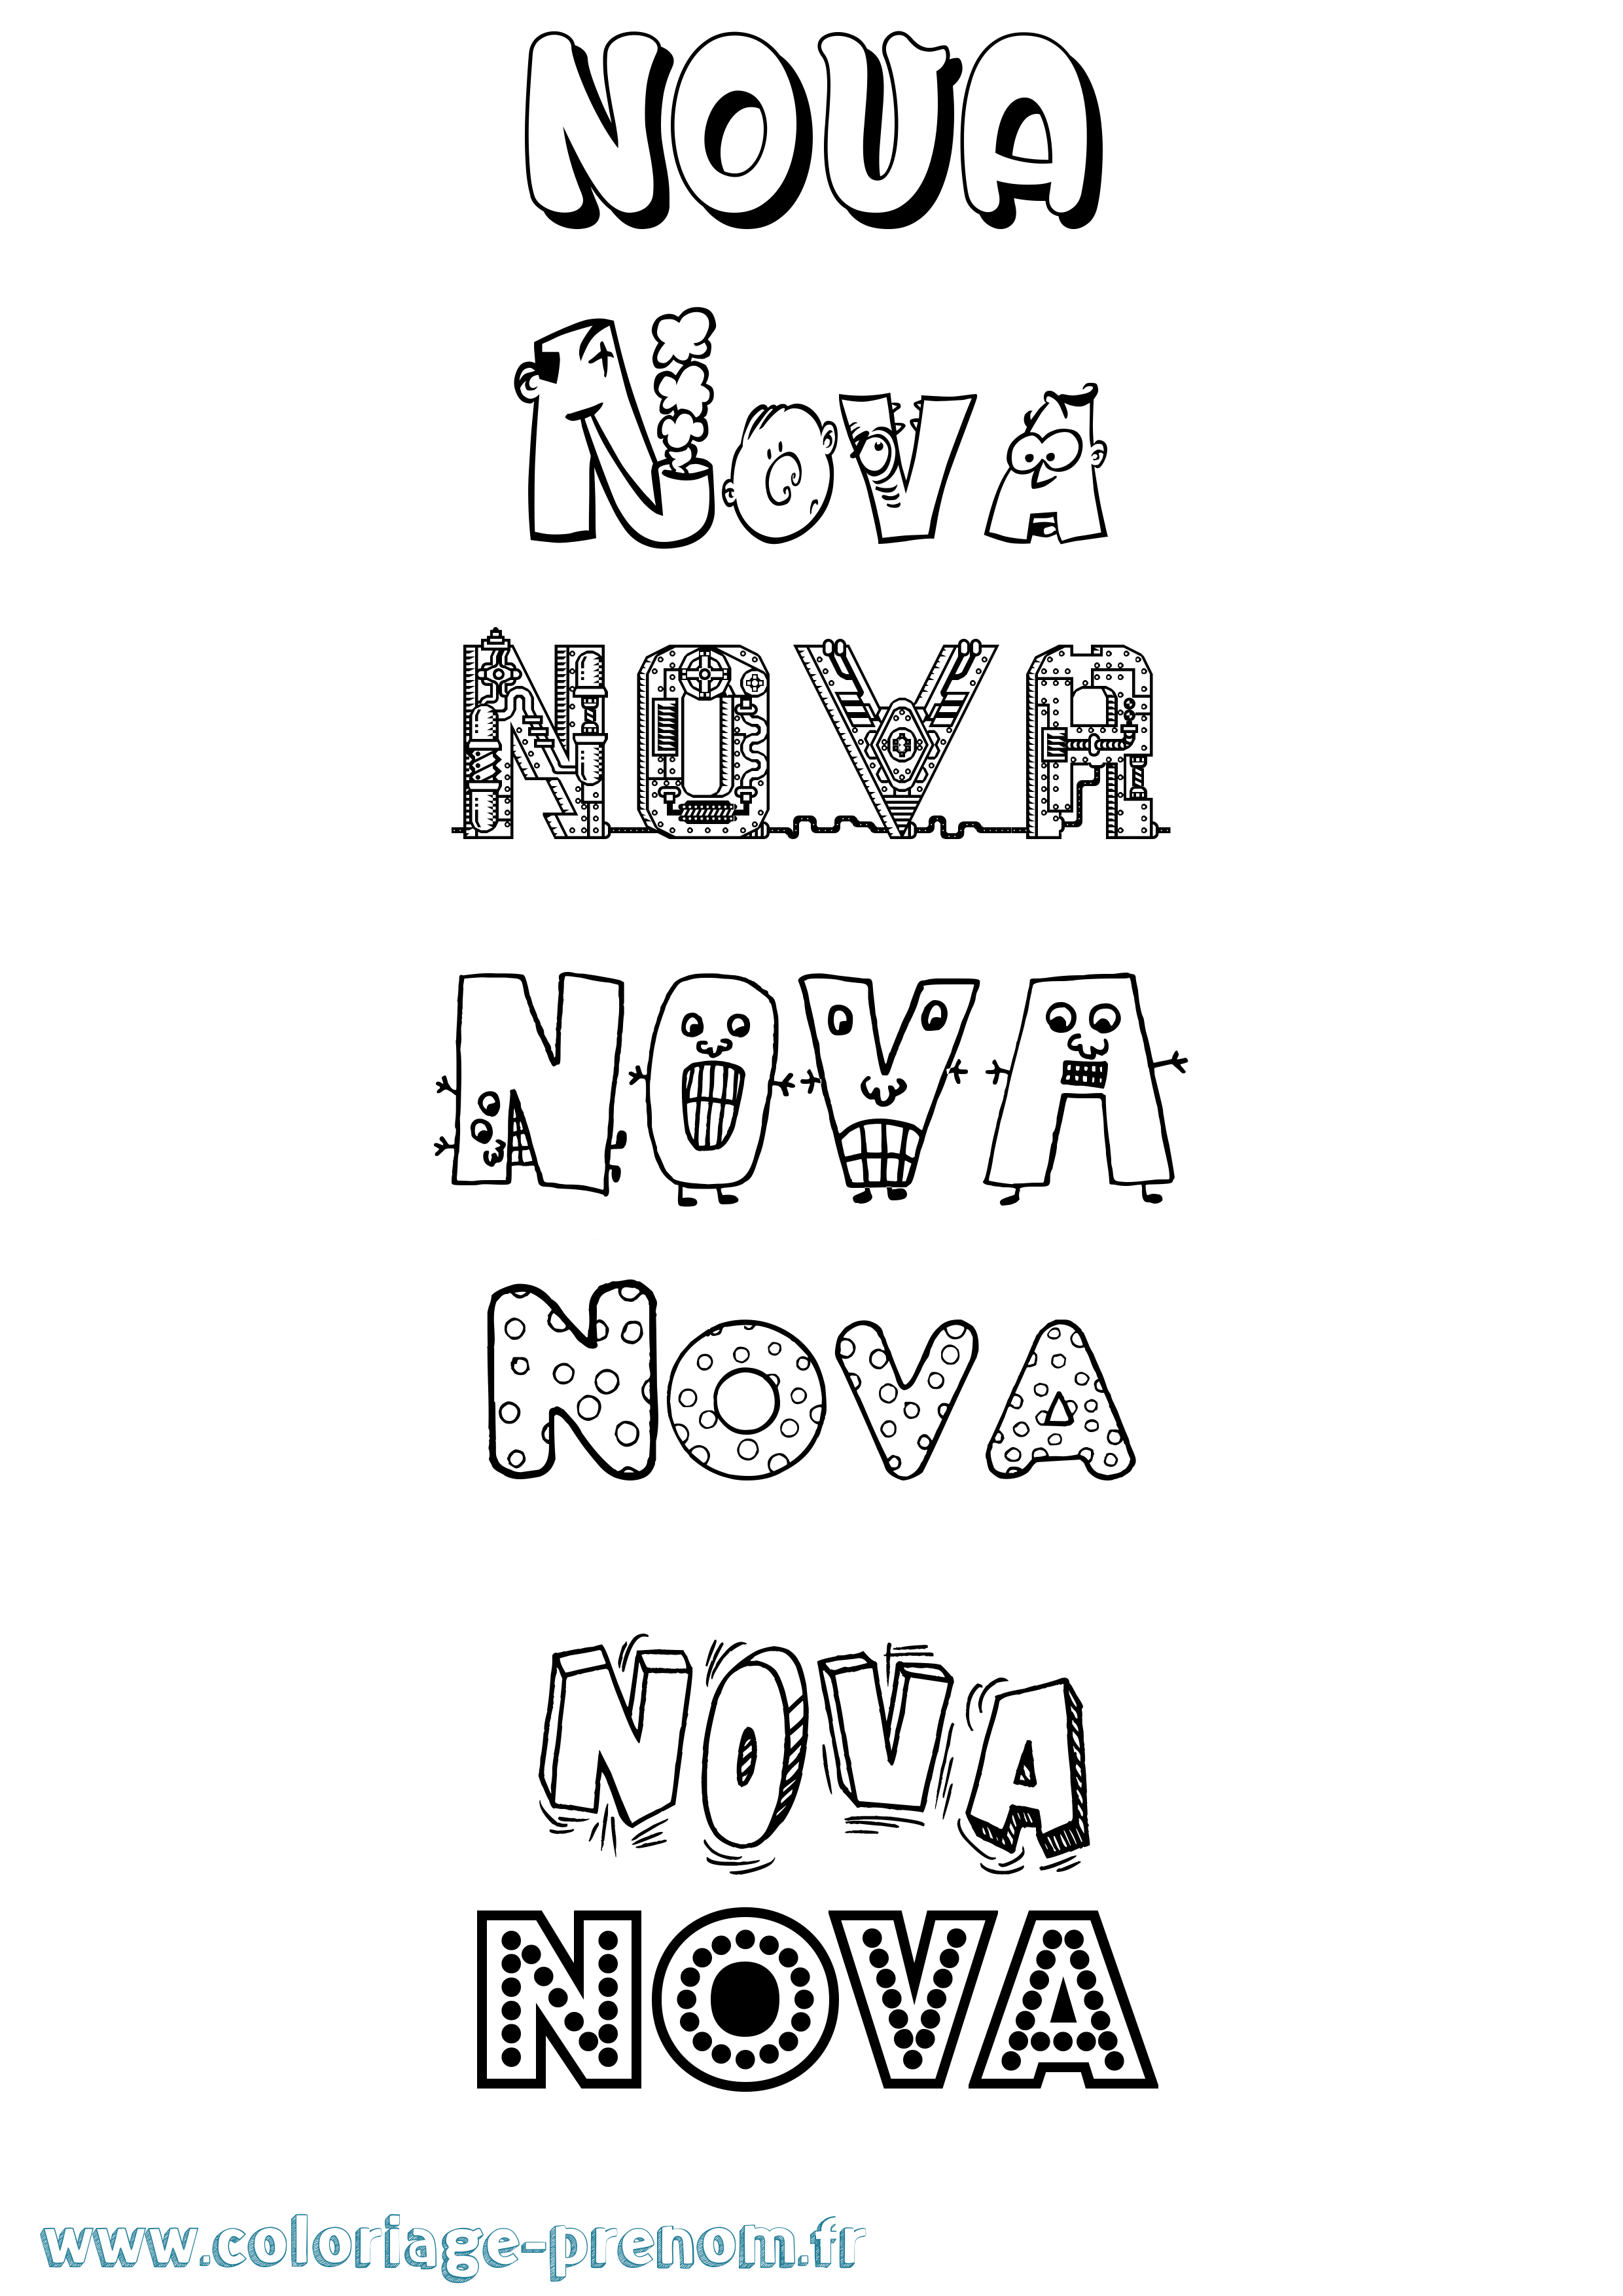 Coloriage prénom Nova Fun